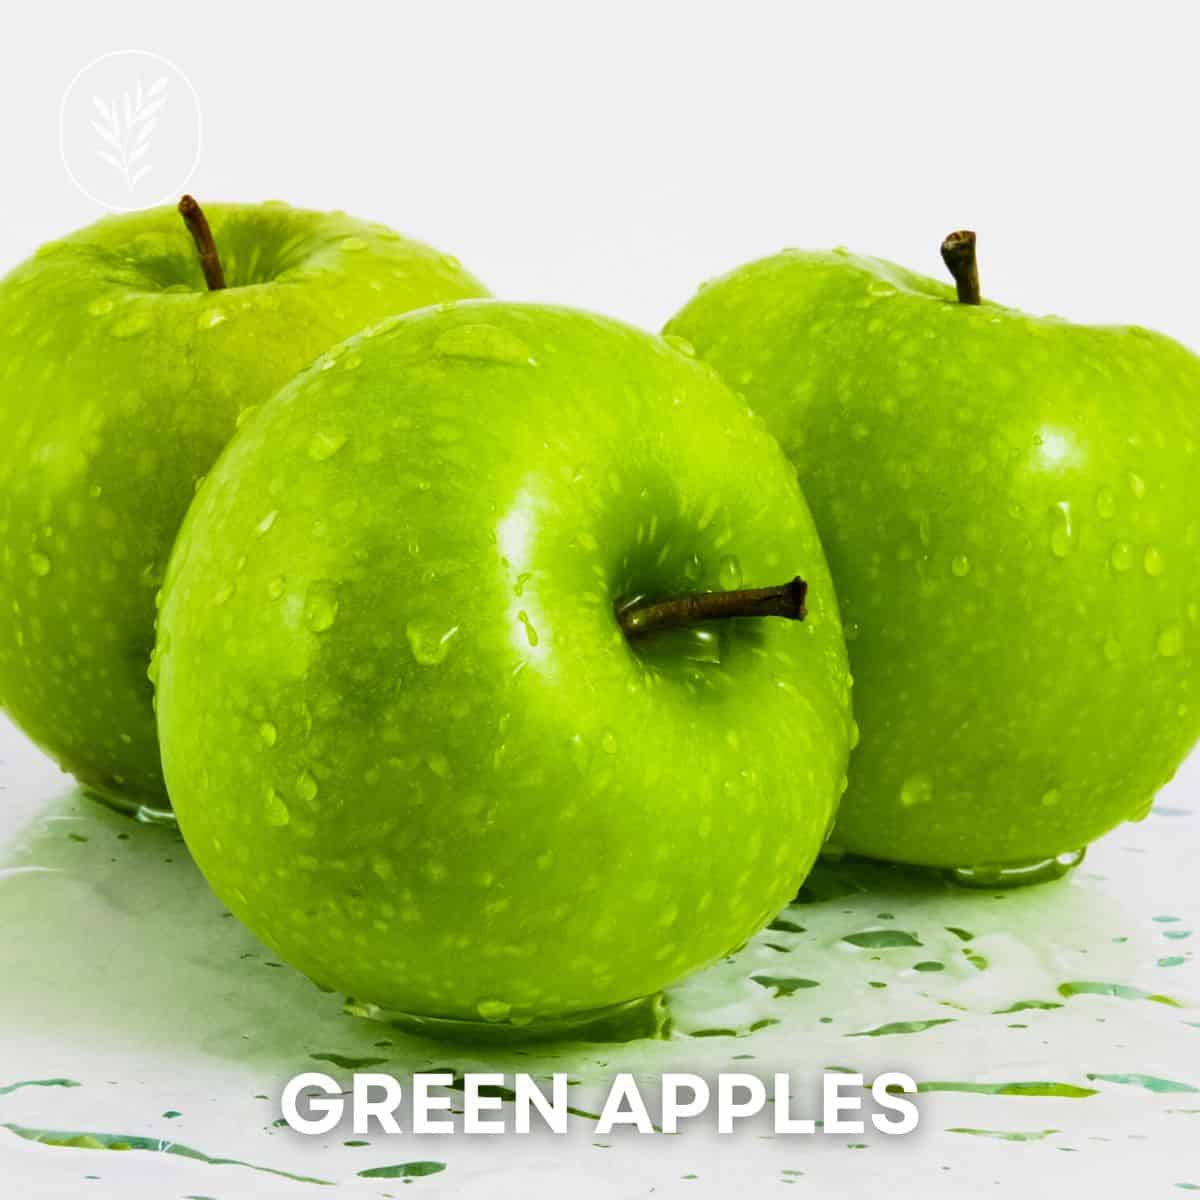 Green apples via @home4theharvest